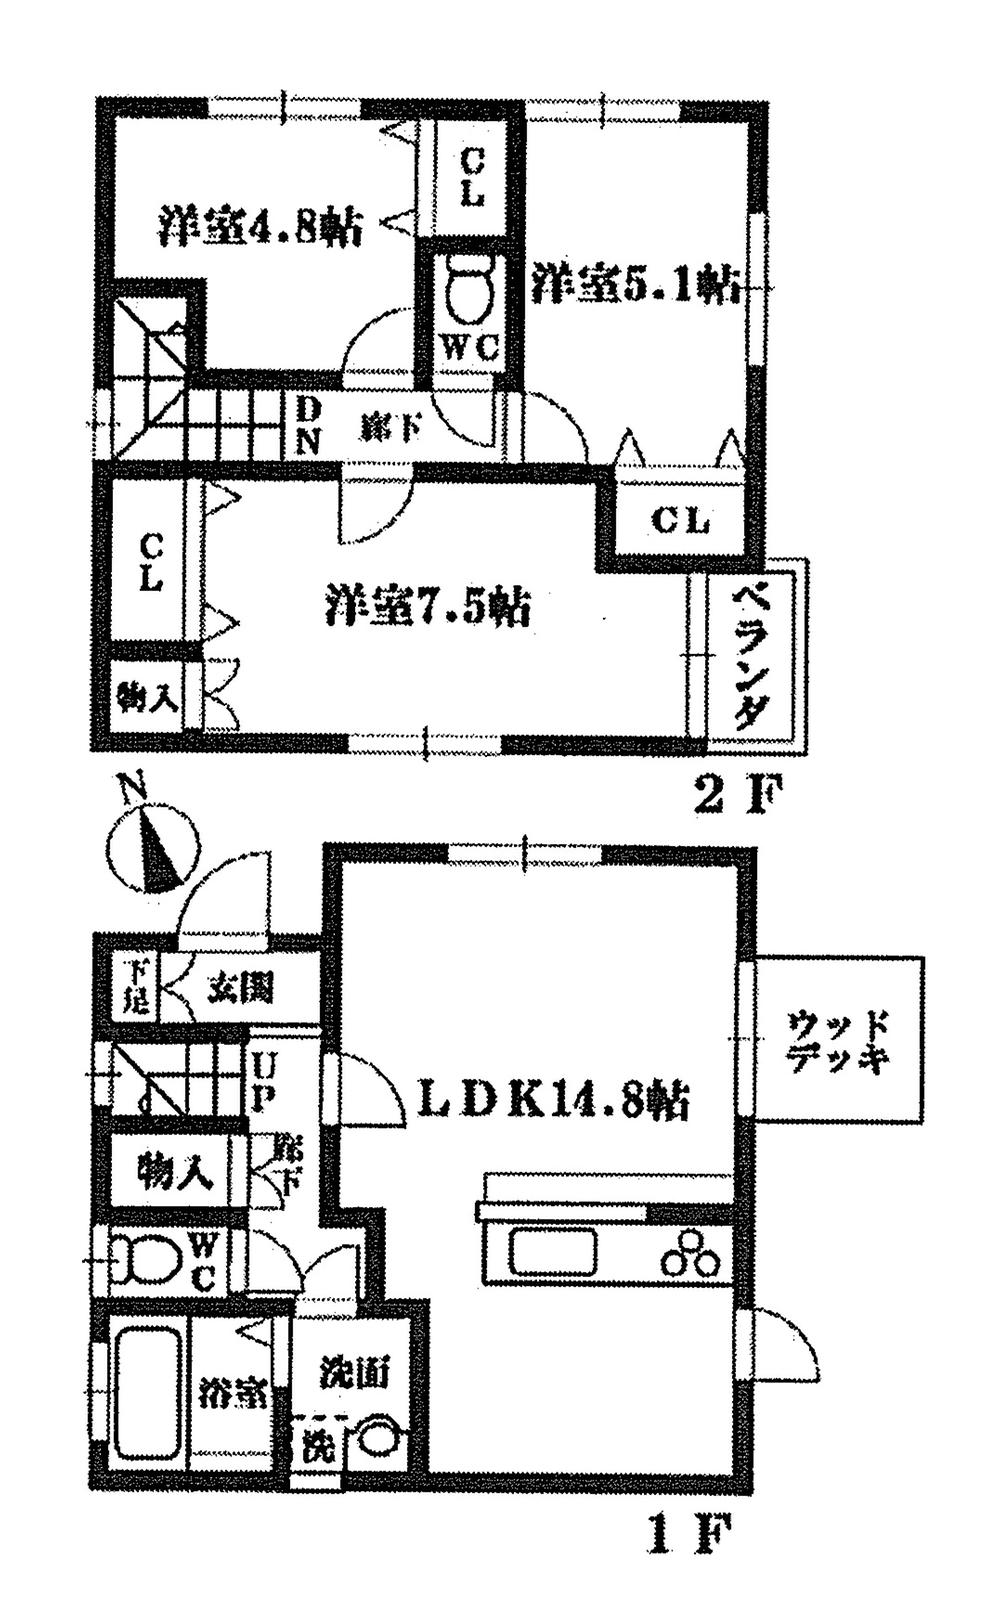 Floor plan. 19,800,000 yen, 3LDK, Land area 132.3 sq m , Building area 78.24 sq m